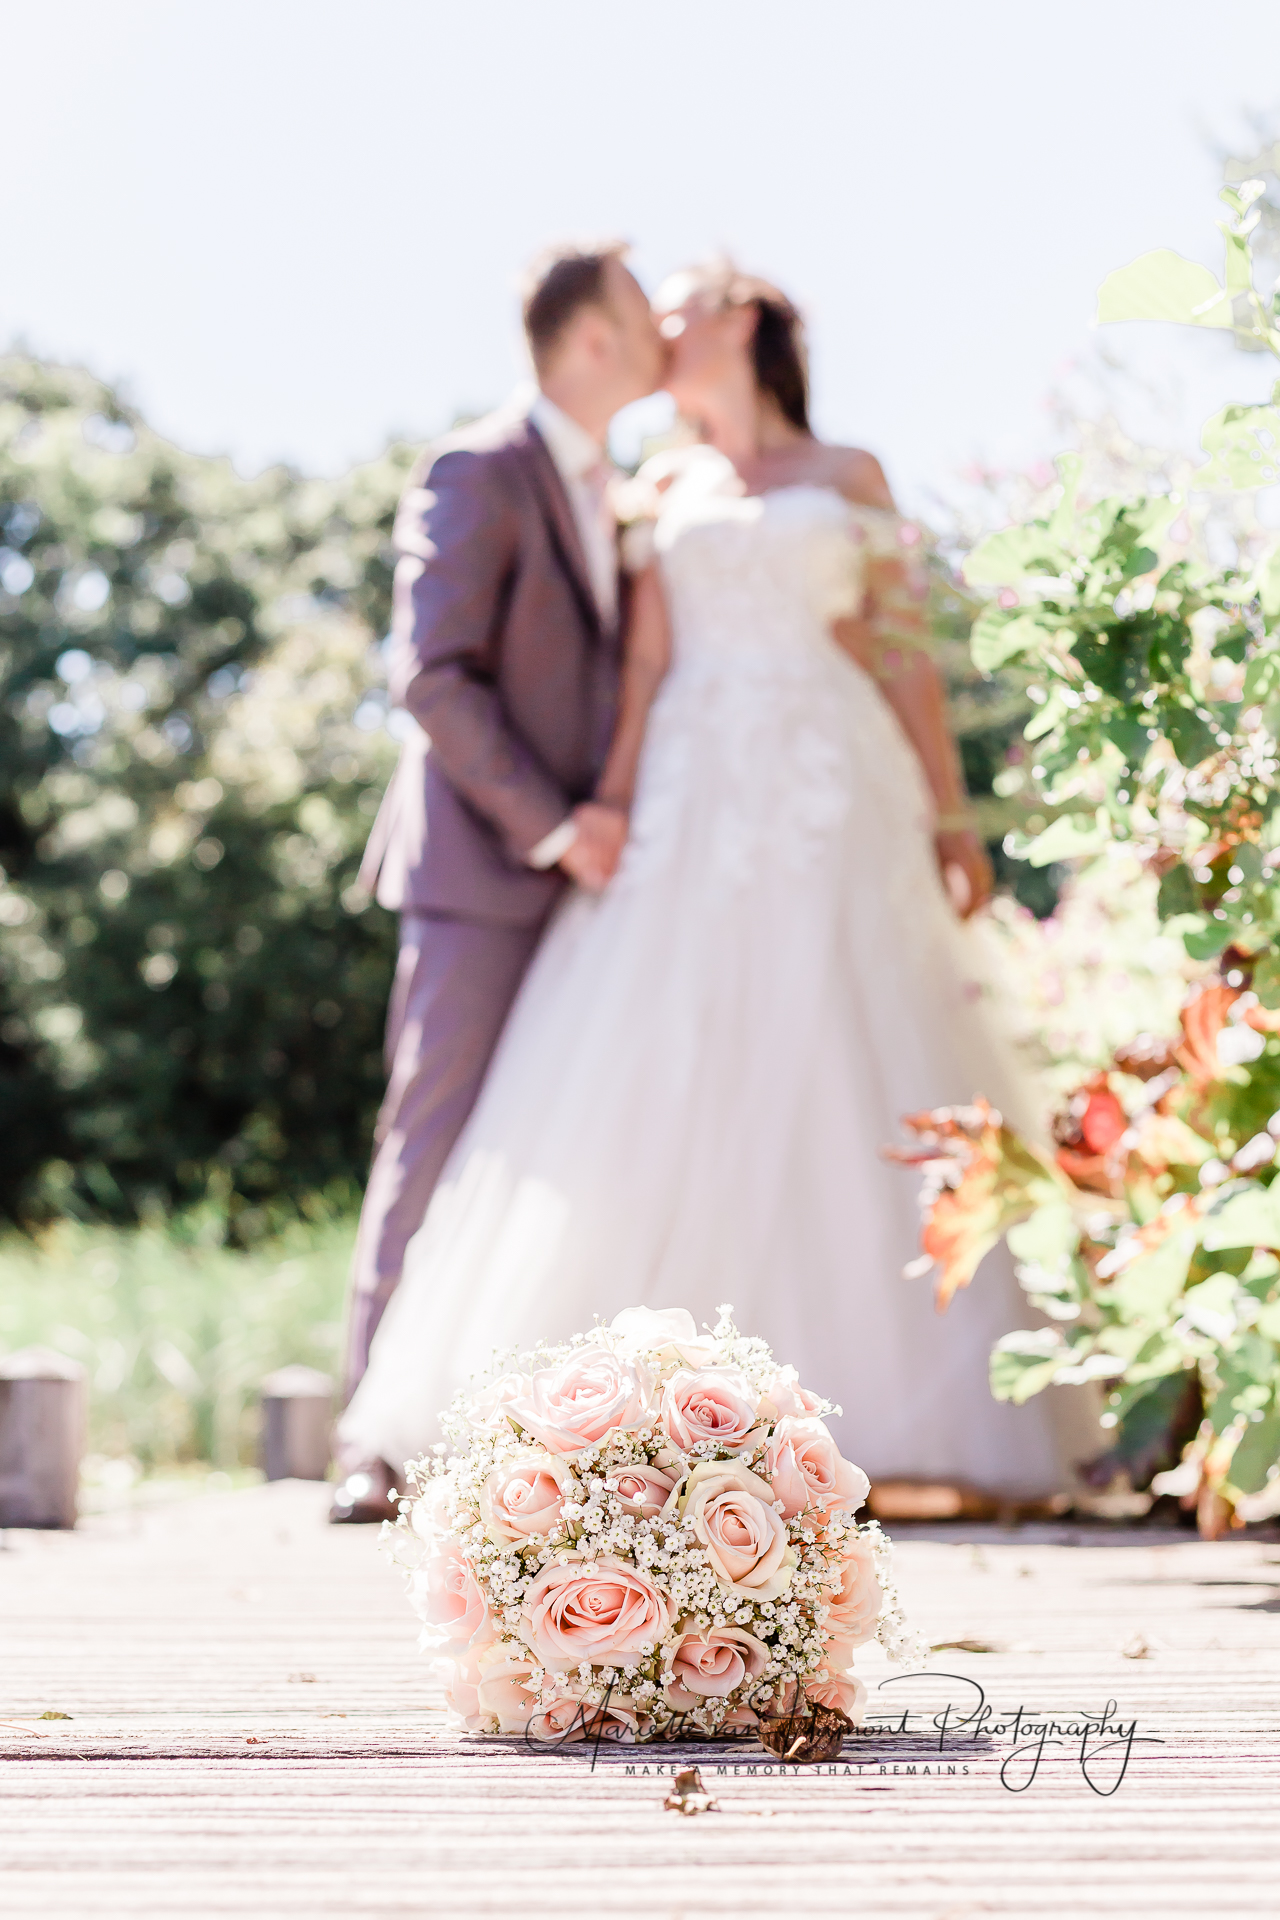 hamontfotografie | bruidsfotografie | ja ik wil | bruidsfotograaf Noord-Brabant | bruidsfotograaf Nederland | trouwen | trouwfotograaf